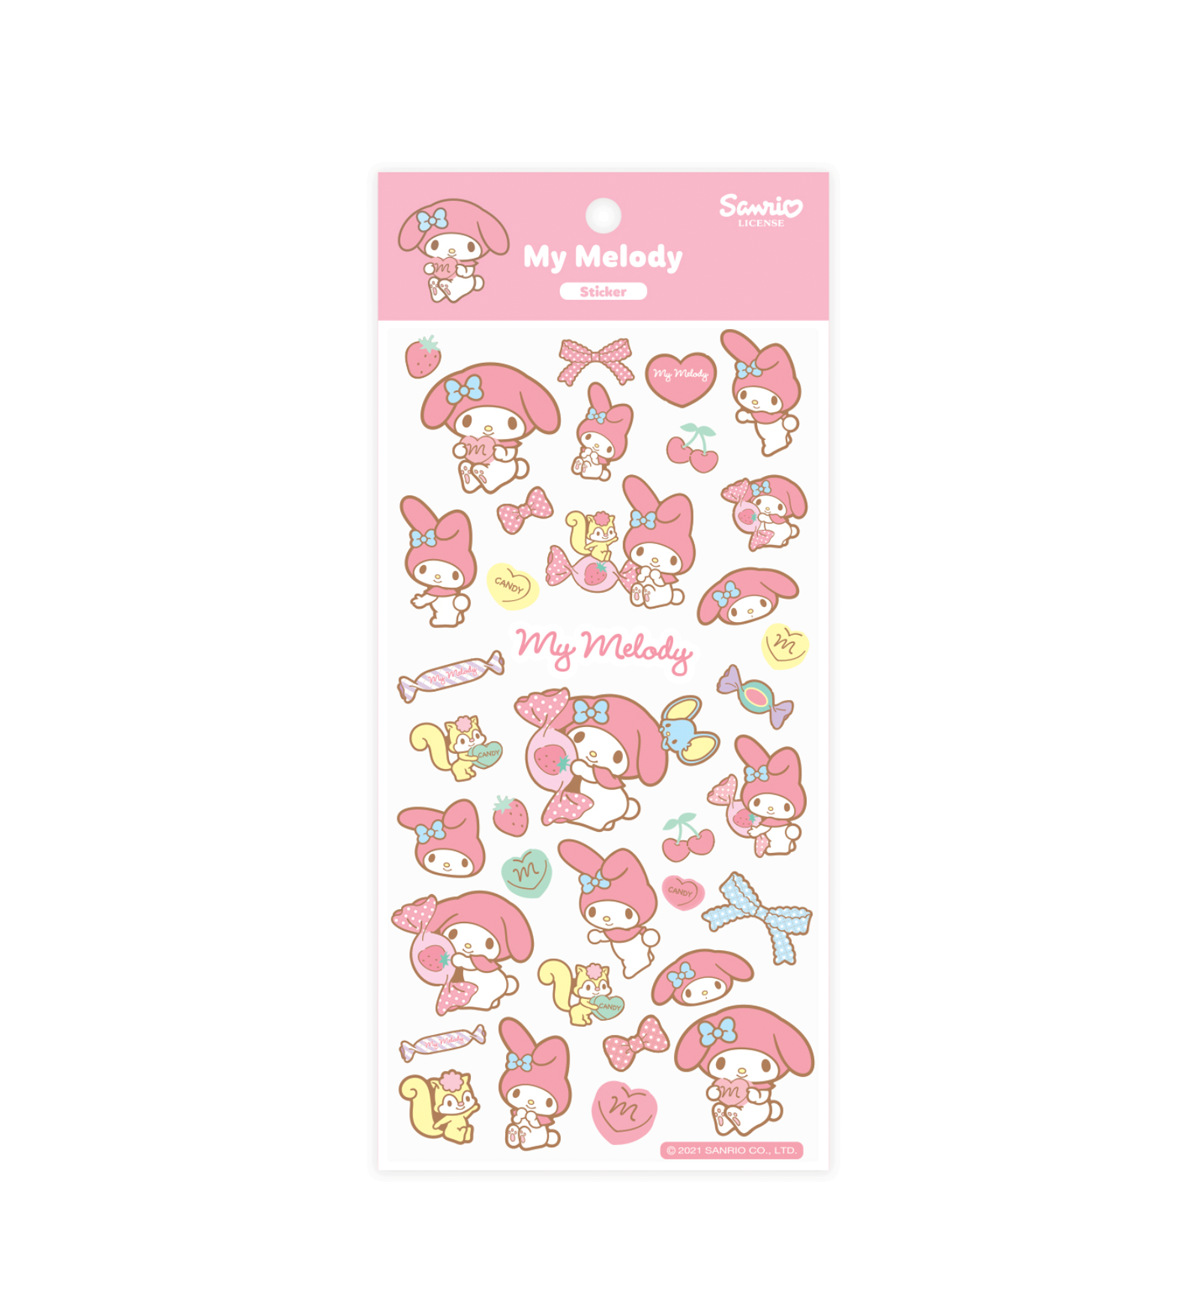 Kuromi Project Pearl Sticker Pack [3 Stickers]